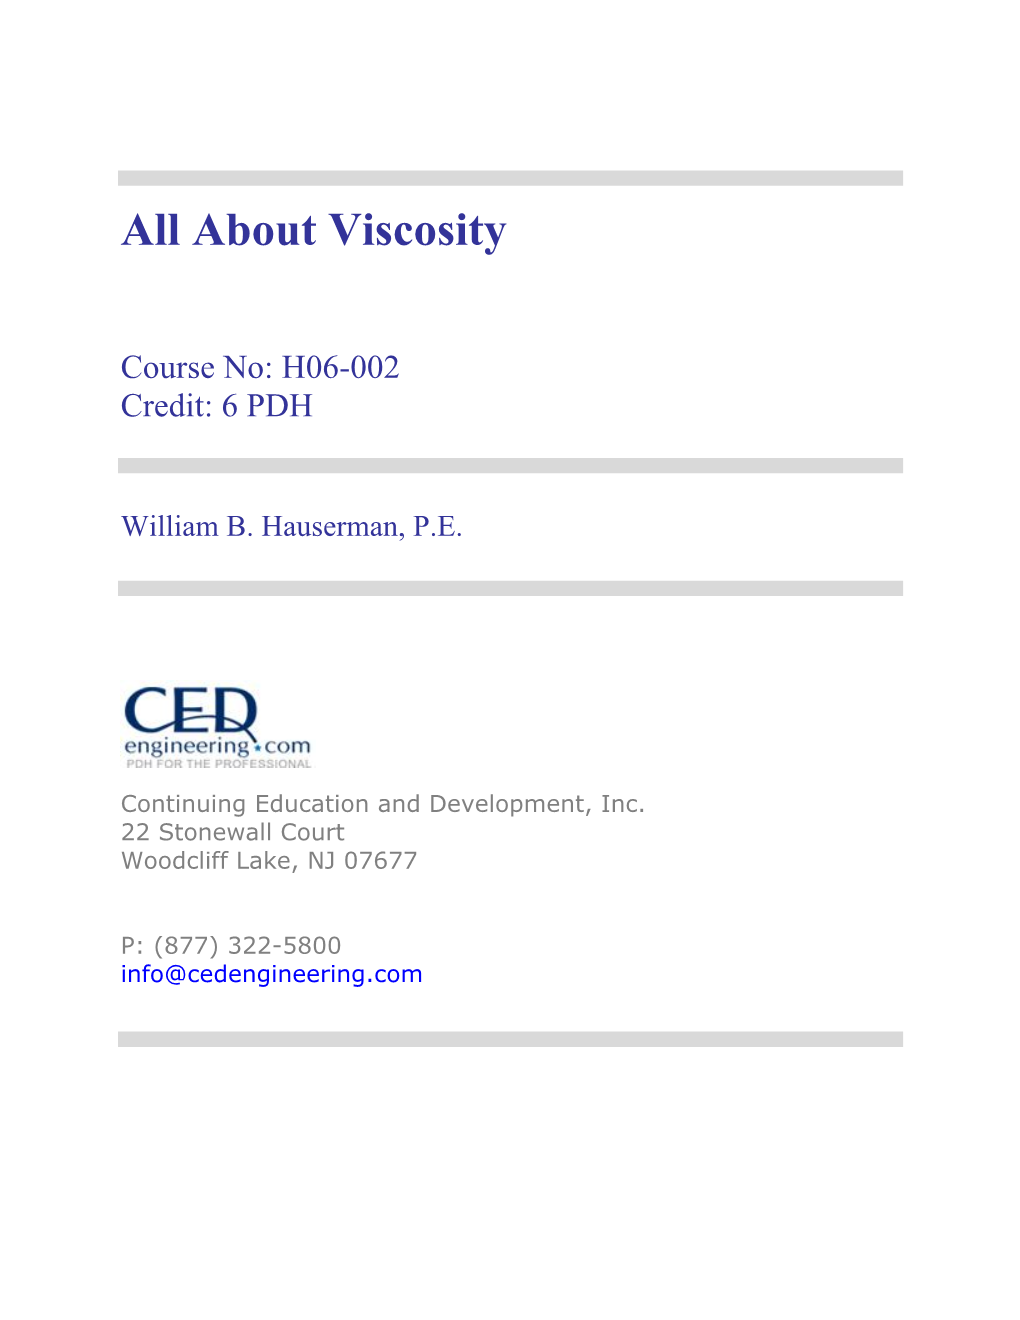 About Viscosity